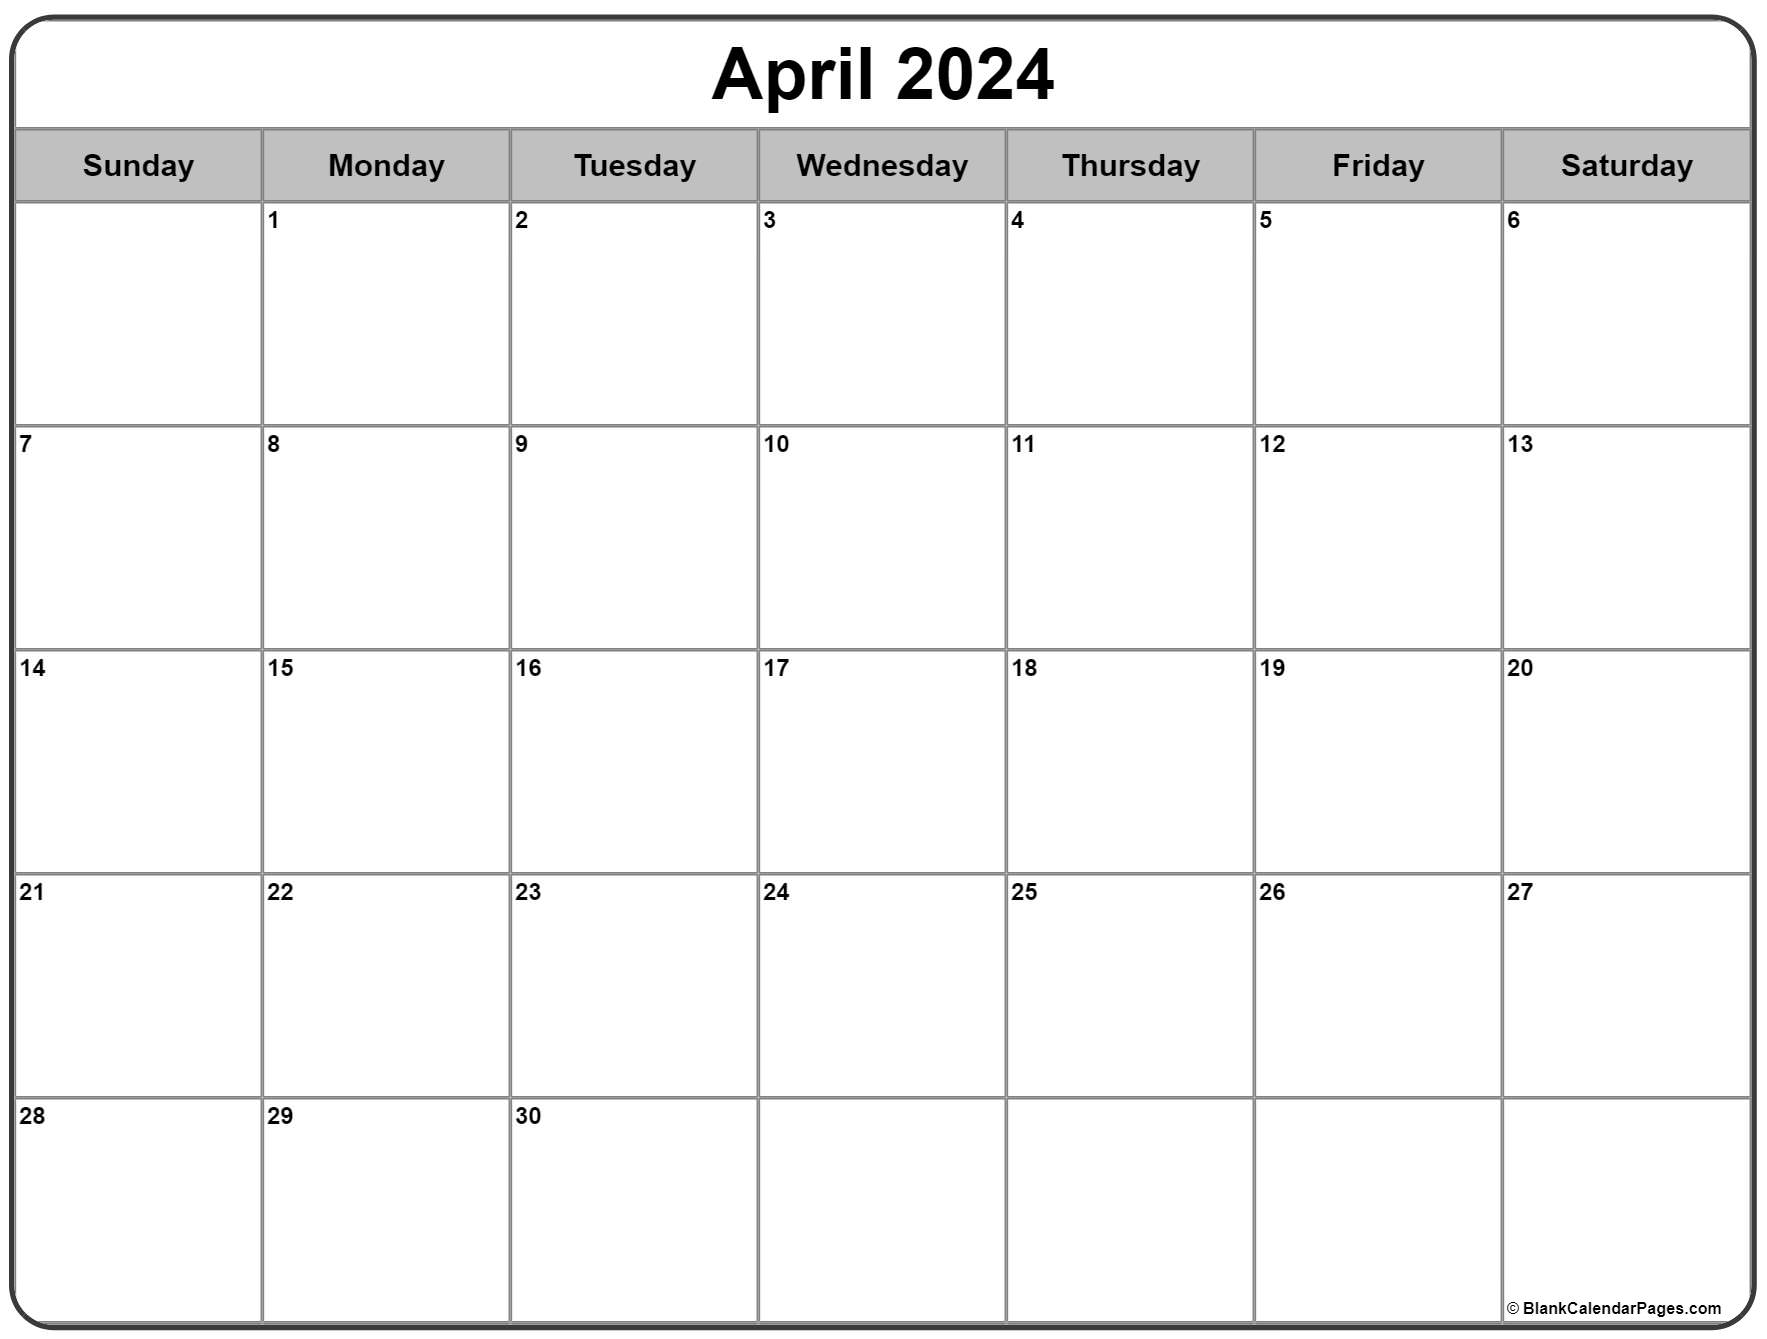 april 2023 calendar free printable calendar april 2023 calendar free